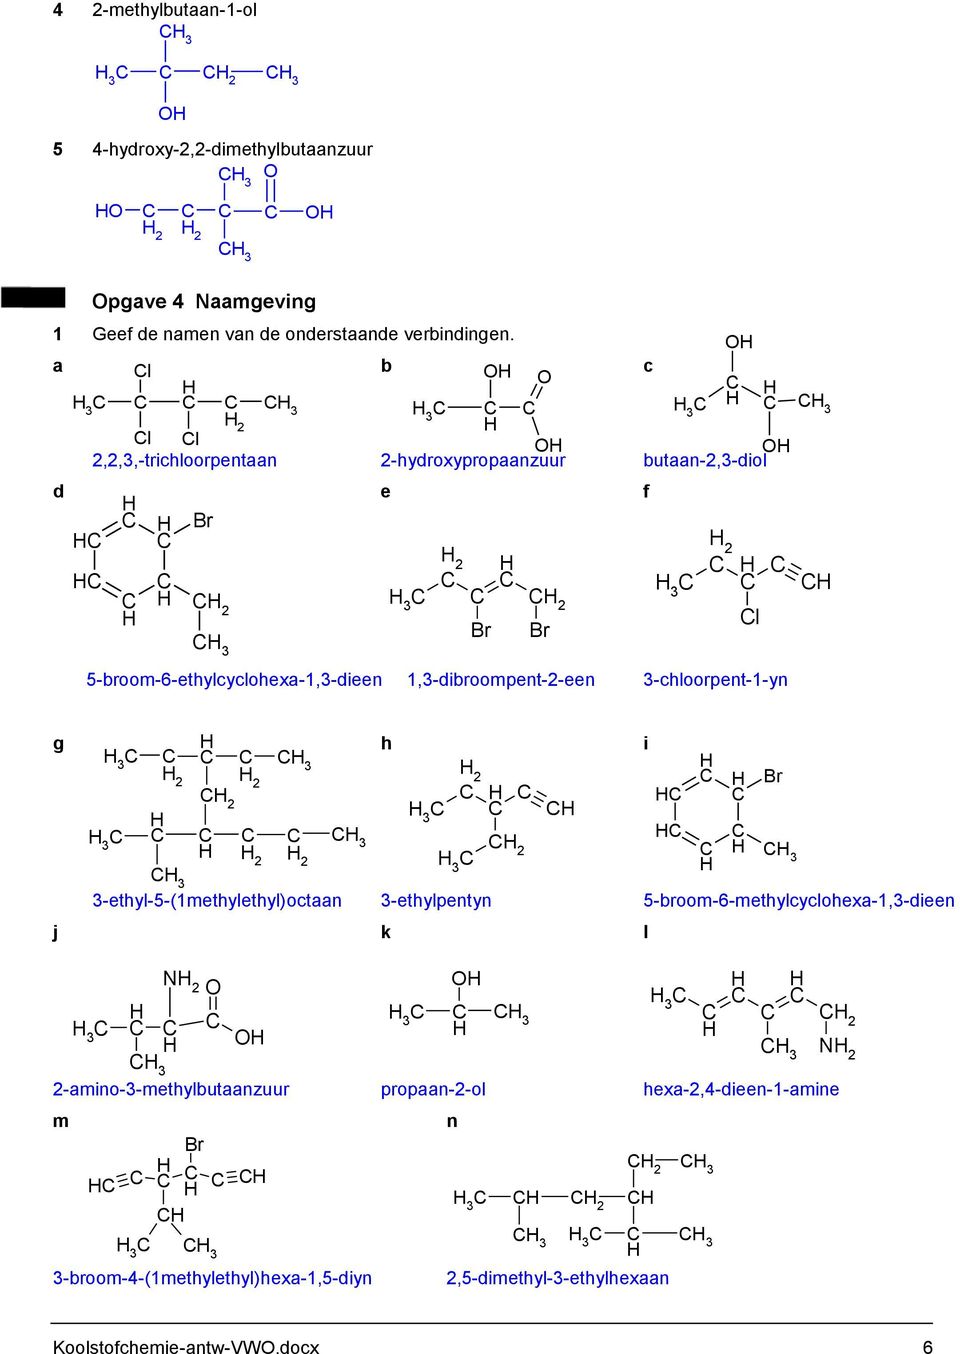 3-chloorpent-1-yn 2 2 Br Br 3 2 l g h i 3 3 2 2 3 3 2 2 2 3 3 3-ethyl-5-(1methylethyl)octaan 3-ethylpentyn 5-broom-6-methylcyclohexa-1,3-dieen j k l 2 3 2 Br 3 N 2 3